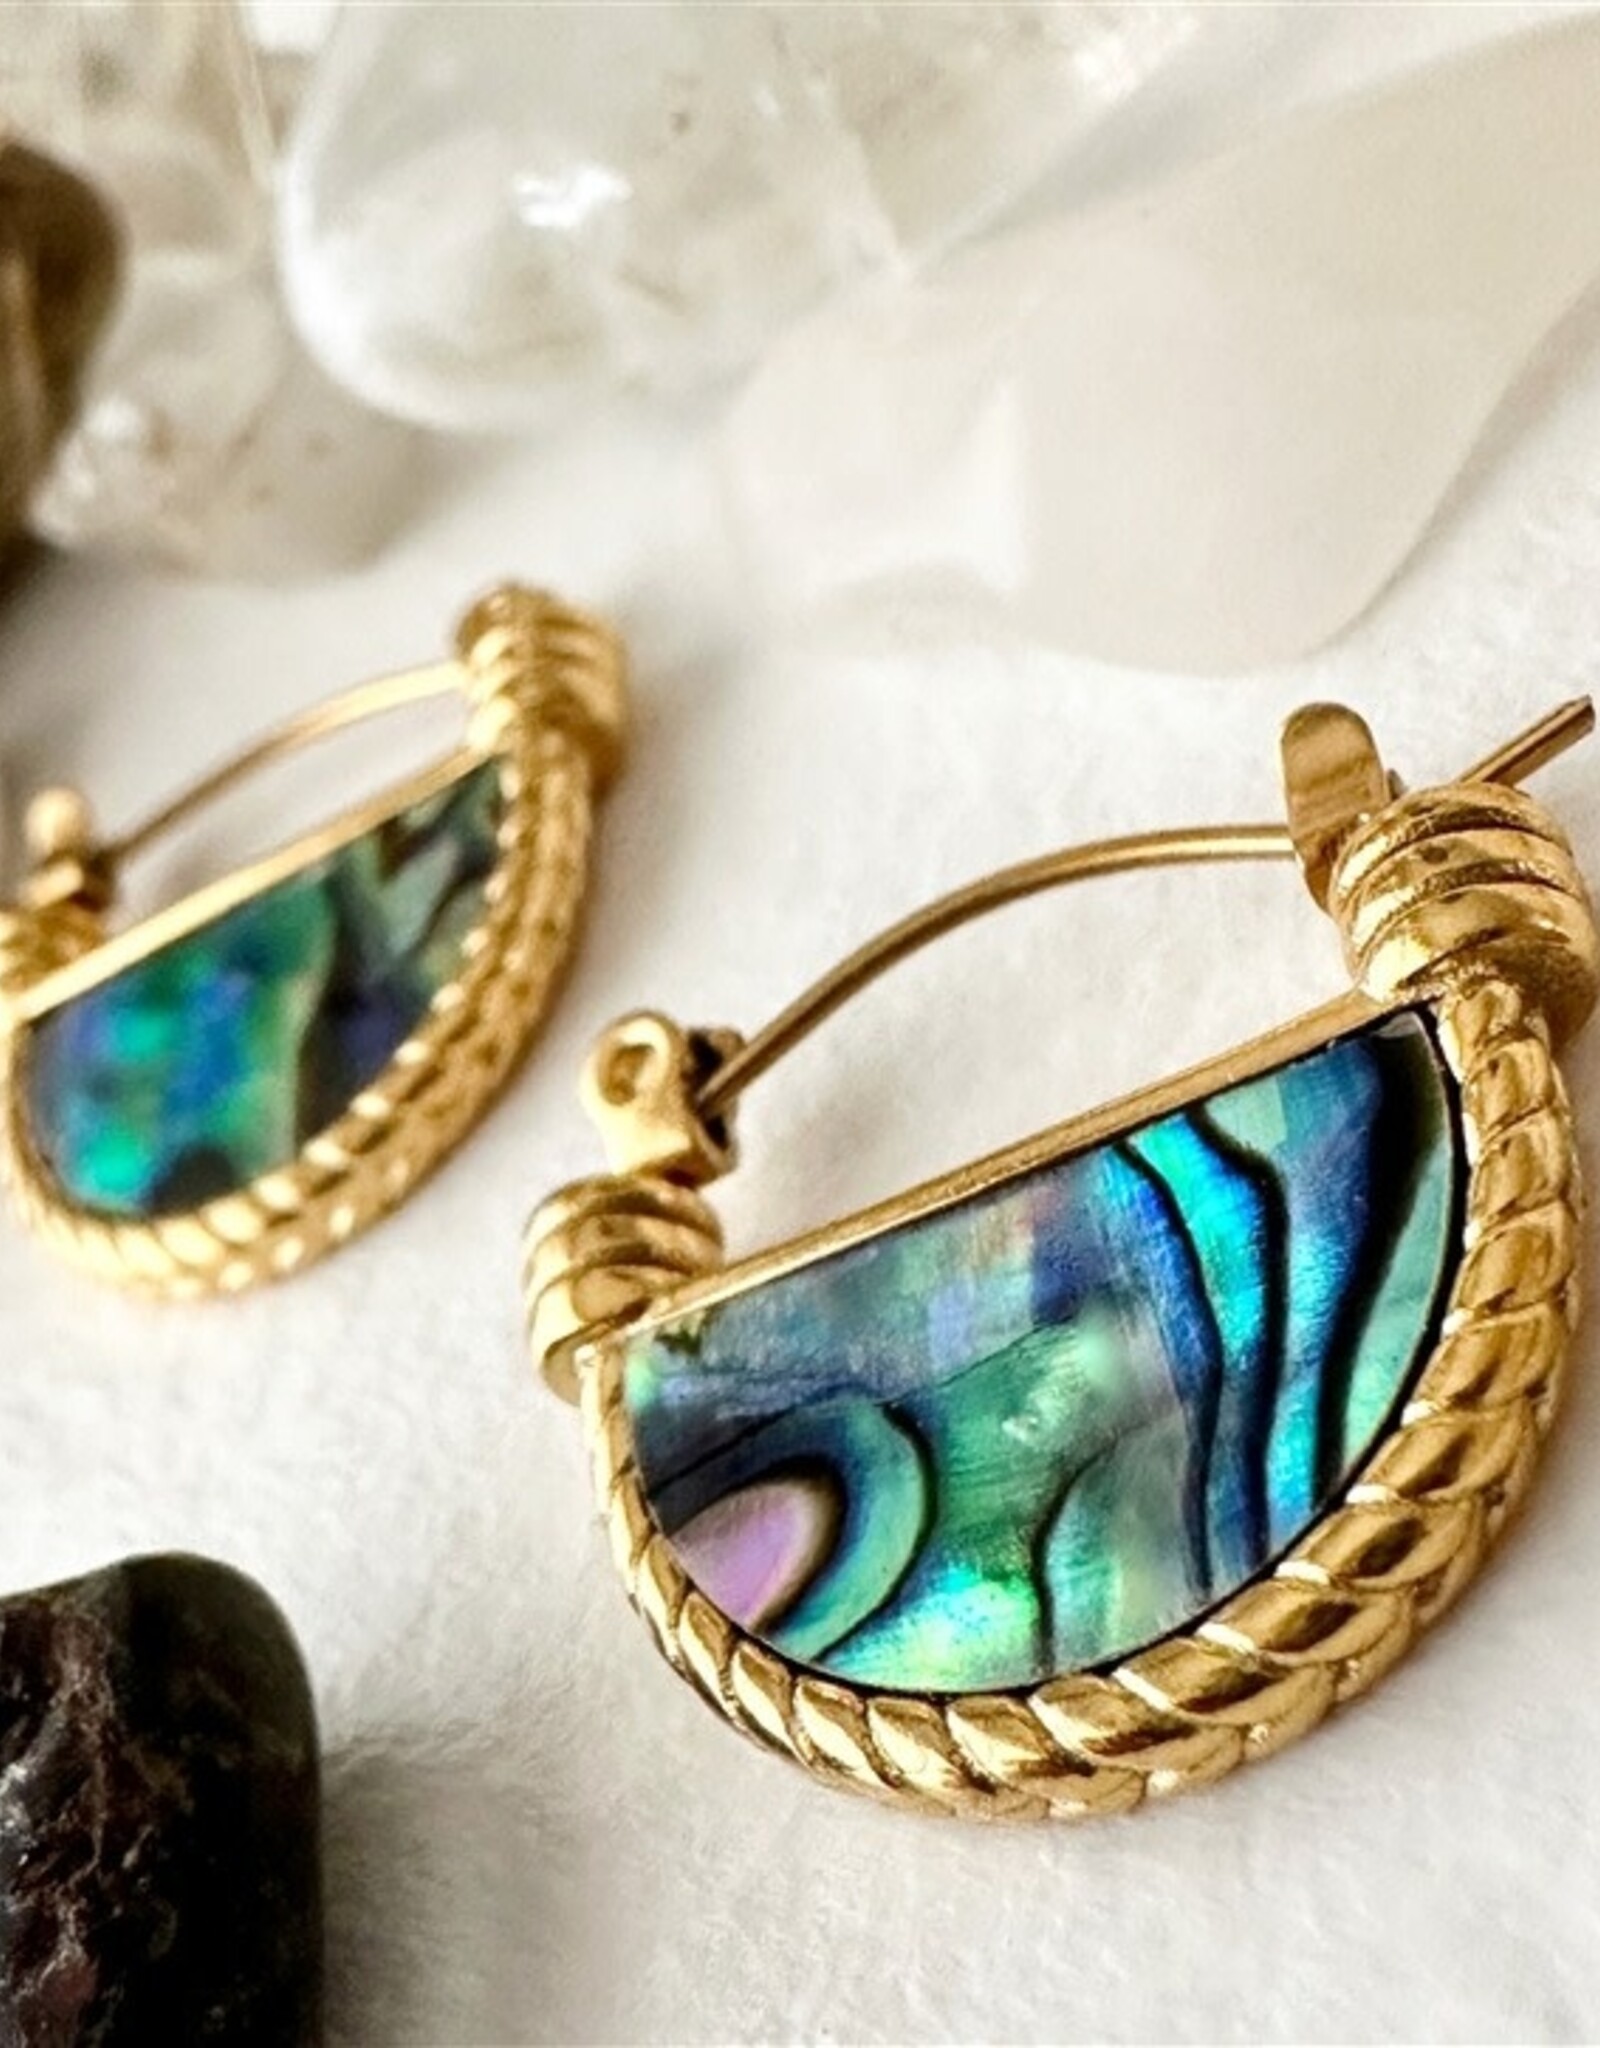 "Mykonos" Fan Hoop Earrings in Gold and Natural Shell - Abalone